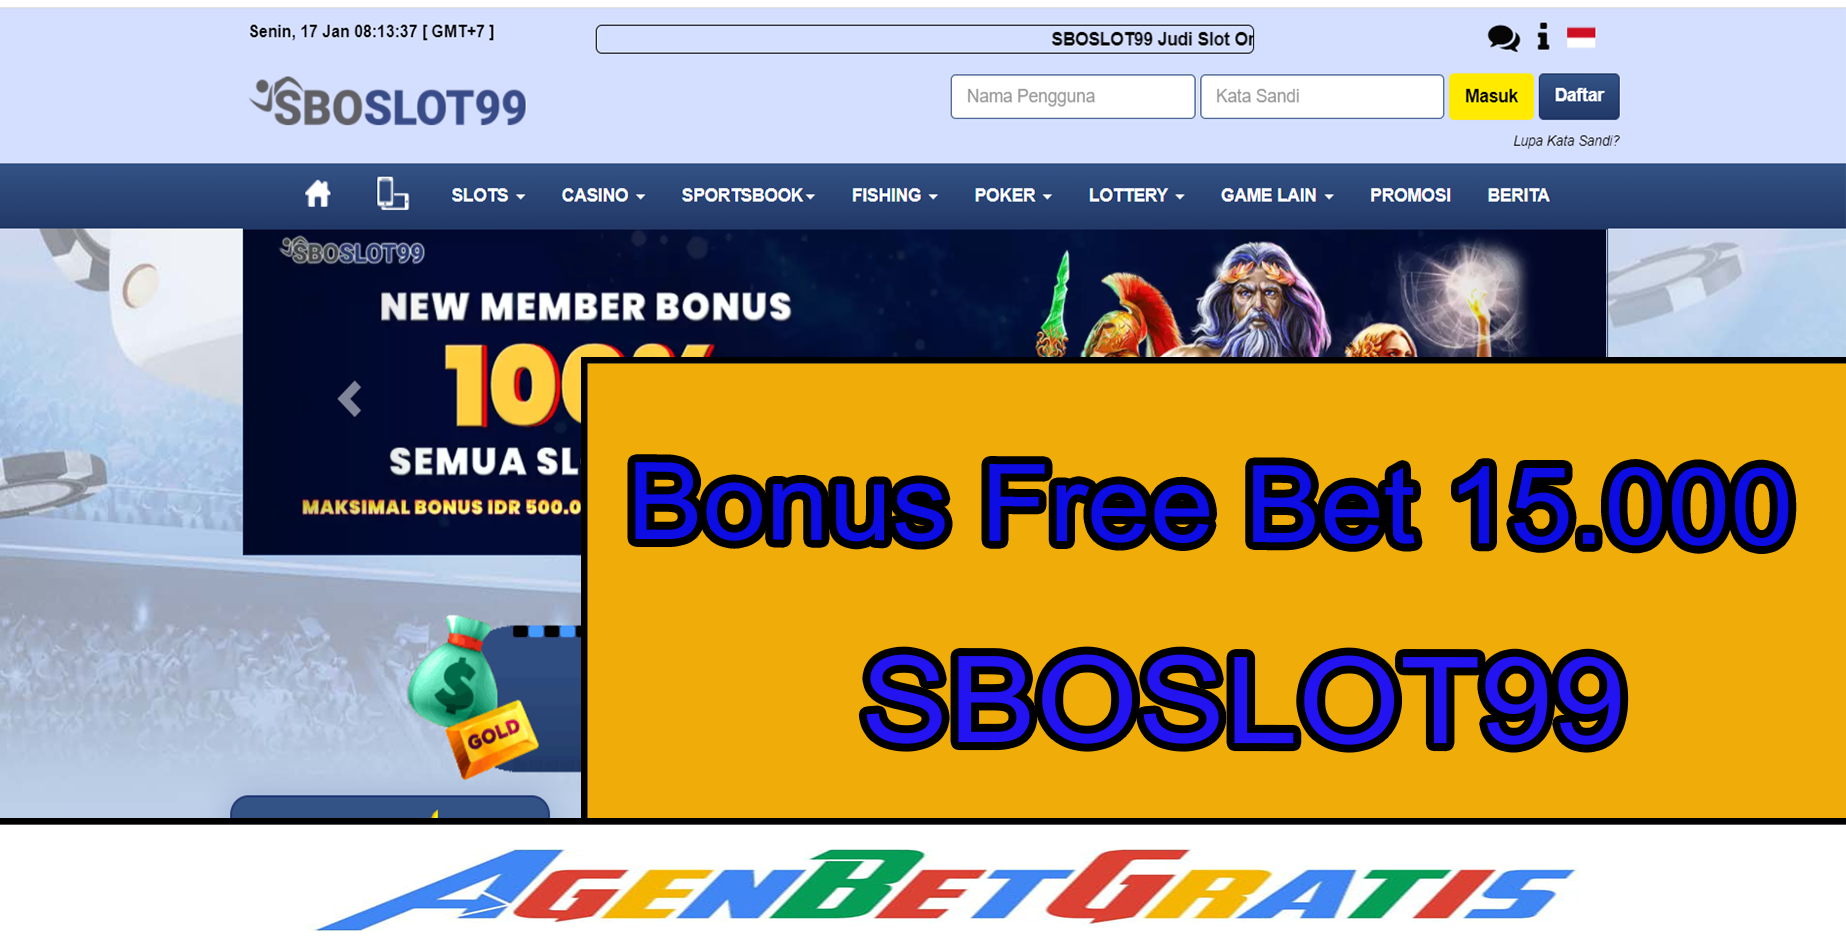 SBOSlot99 - Bonus Free Bet 15.000